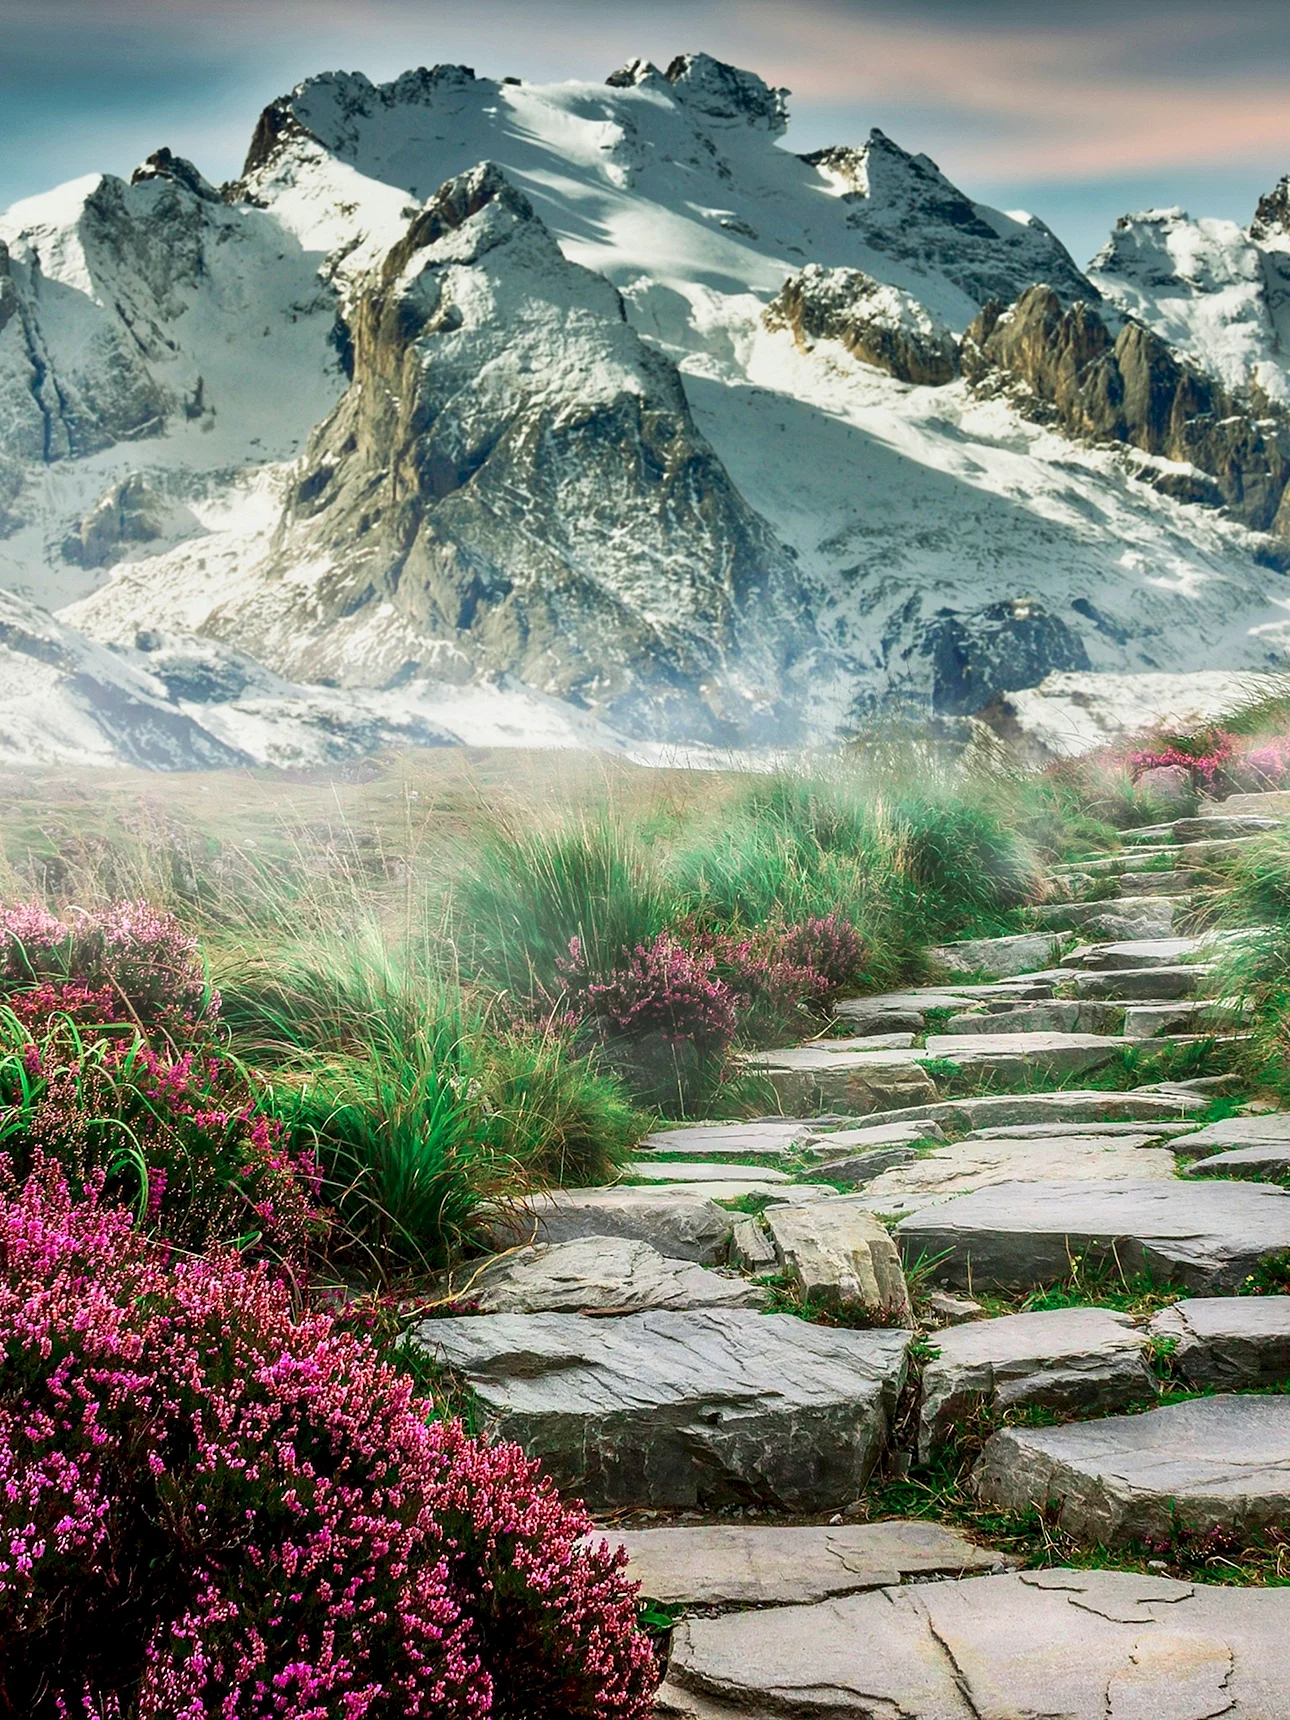 Digital Mountain Landscape Wallpaper For iPhone